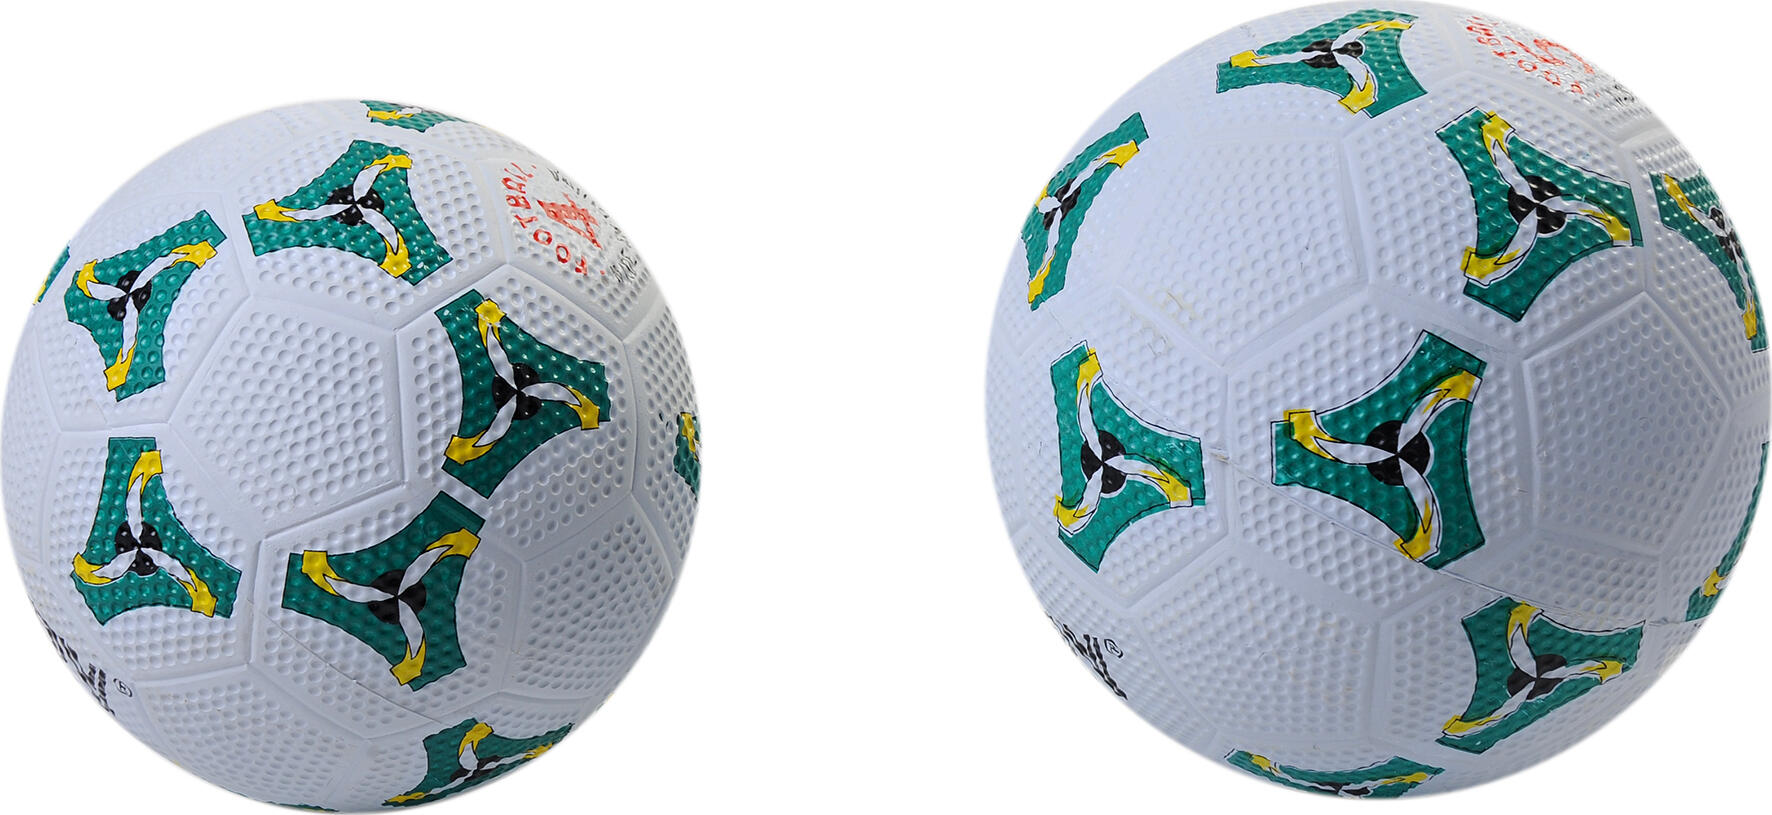 Ballon Football  - NYLON - diam. 220 mm